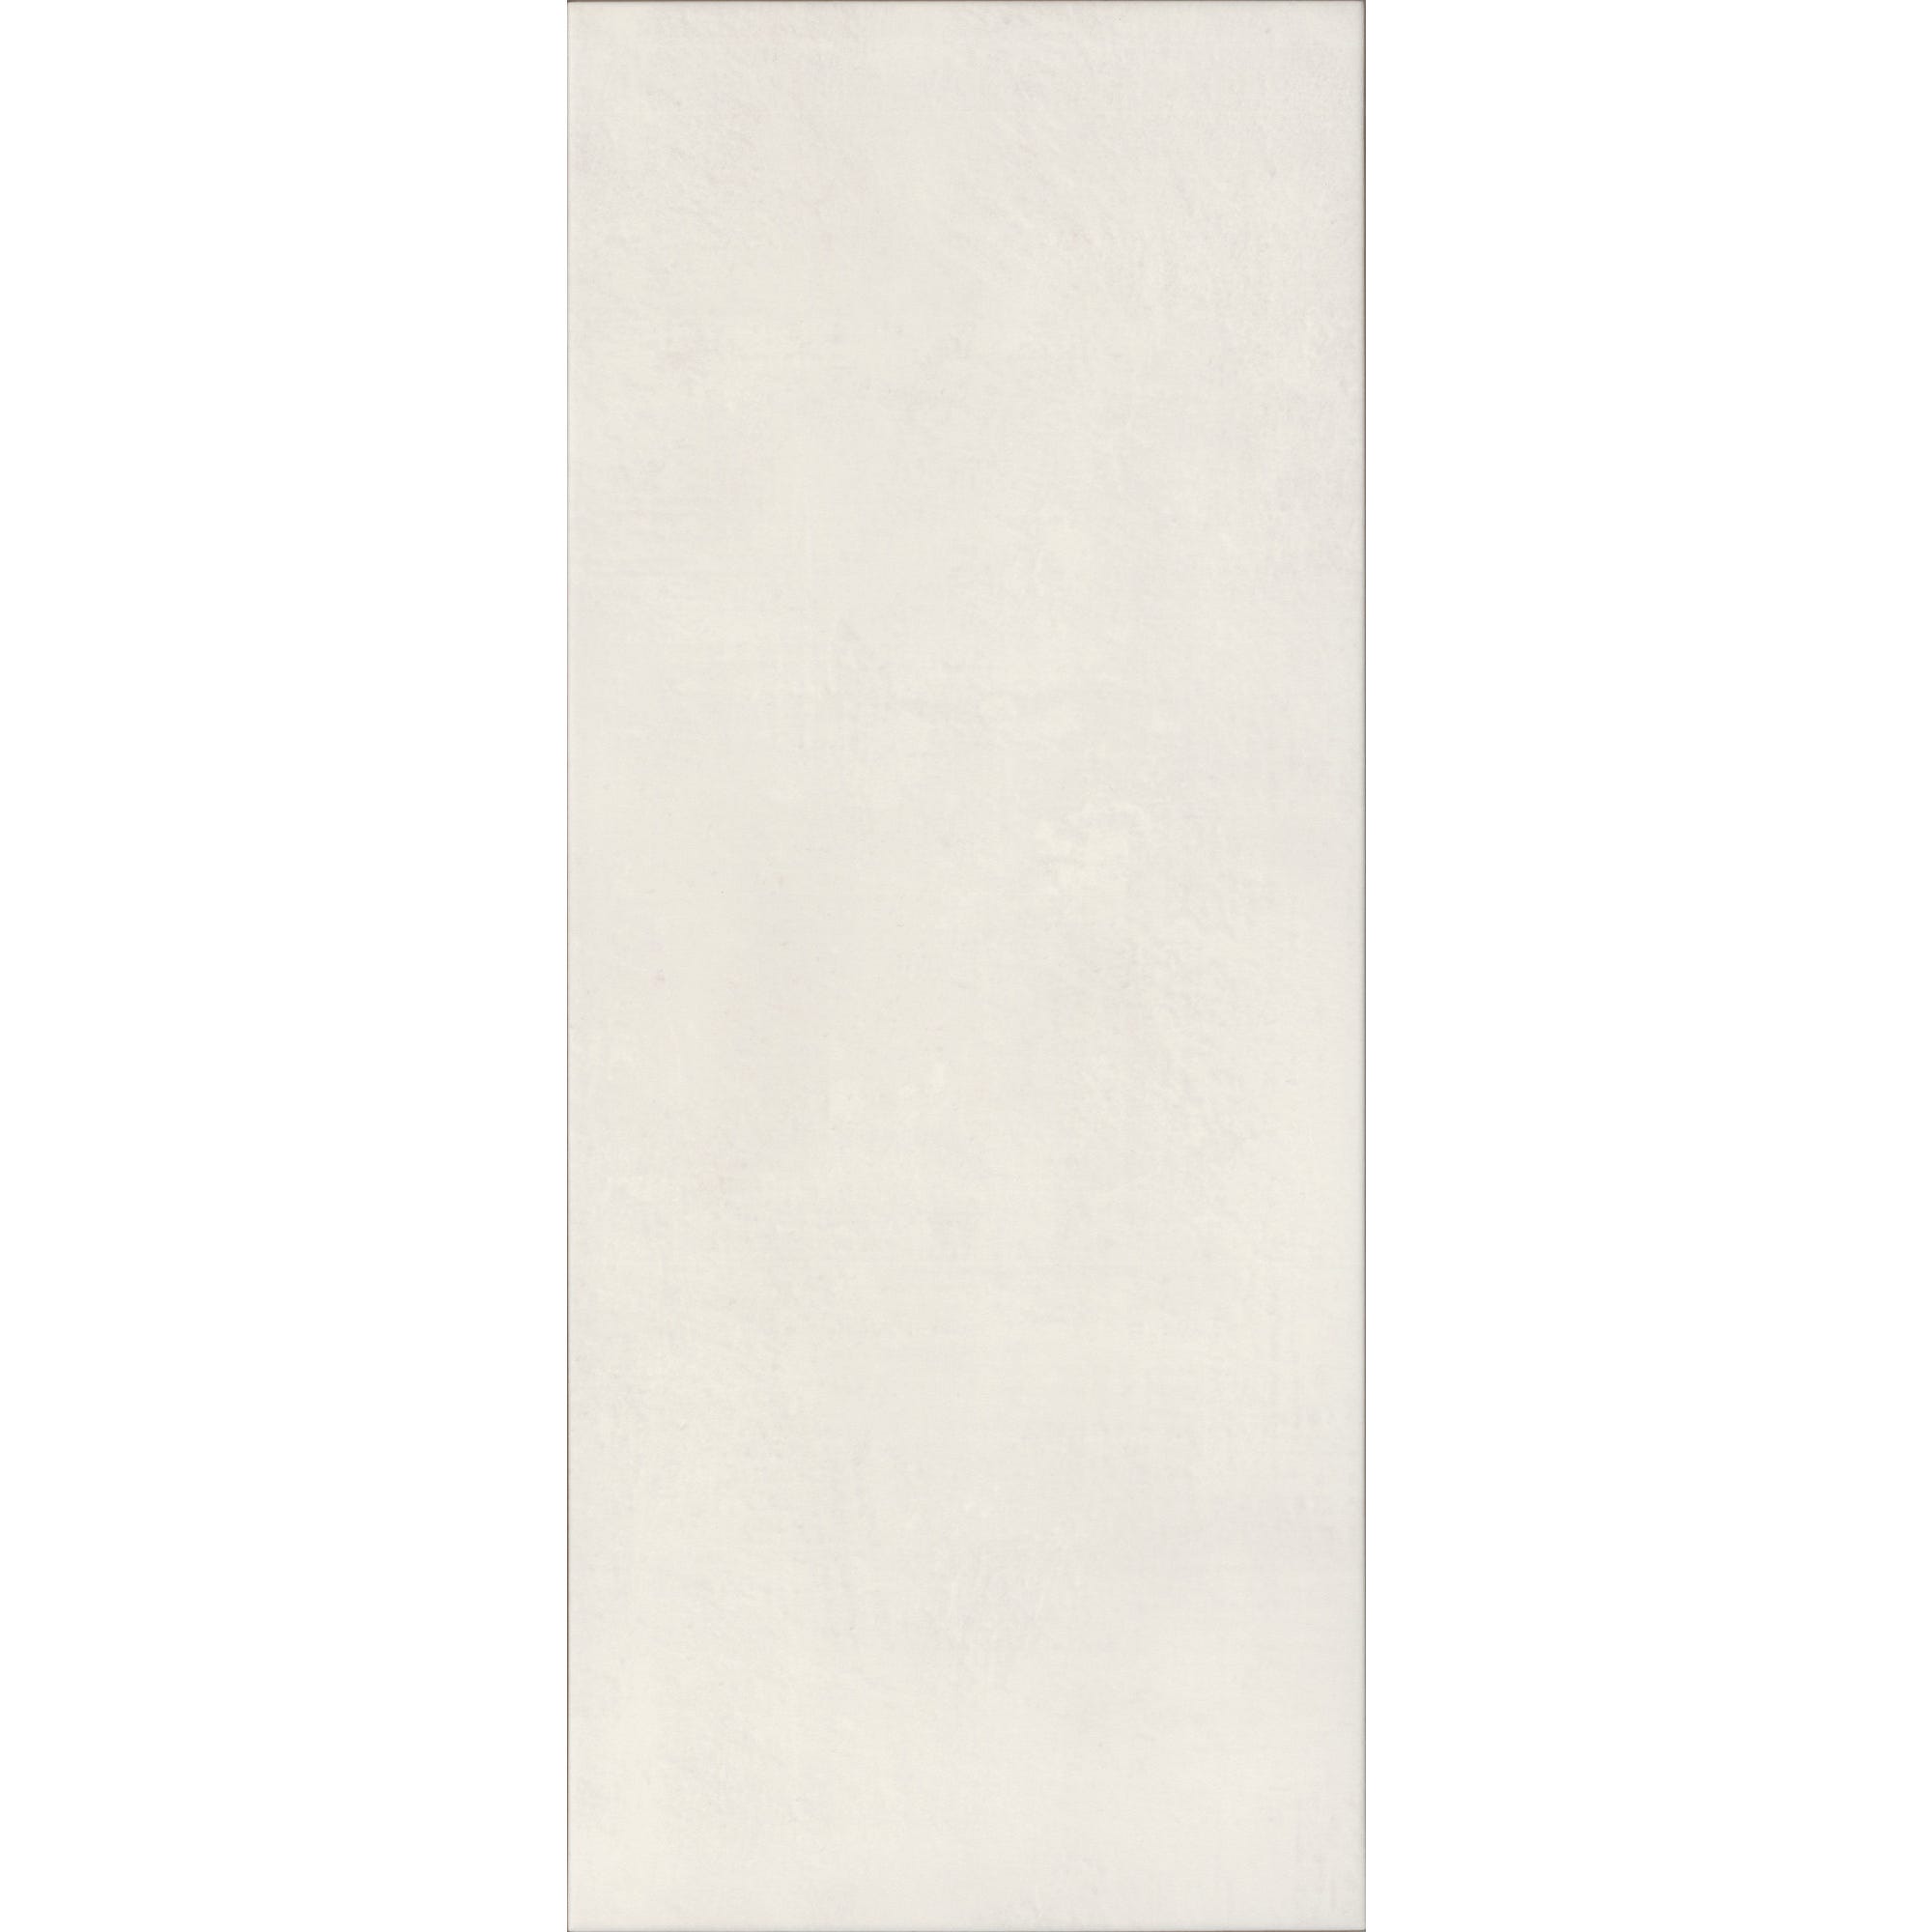 Faïence blanc effet béton l.25 x L.60 cm Porcellana 4